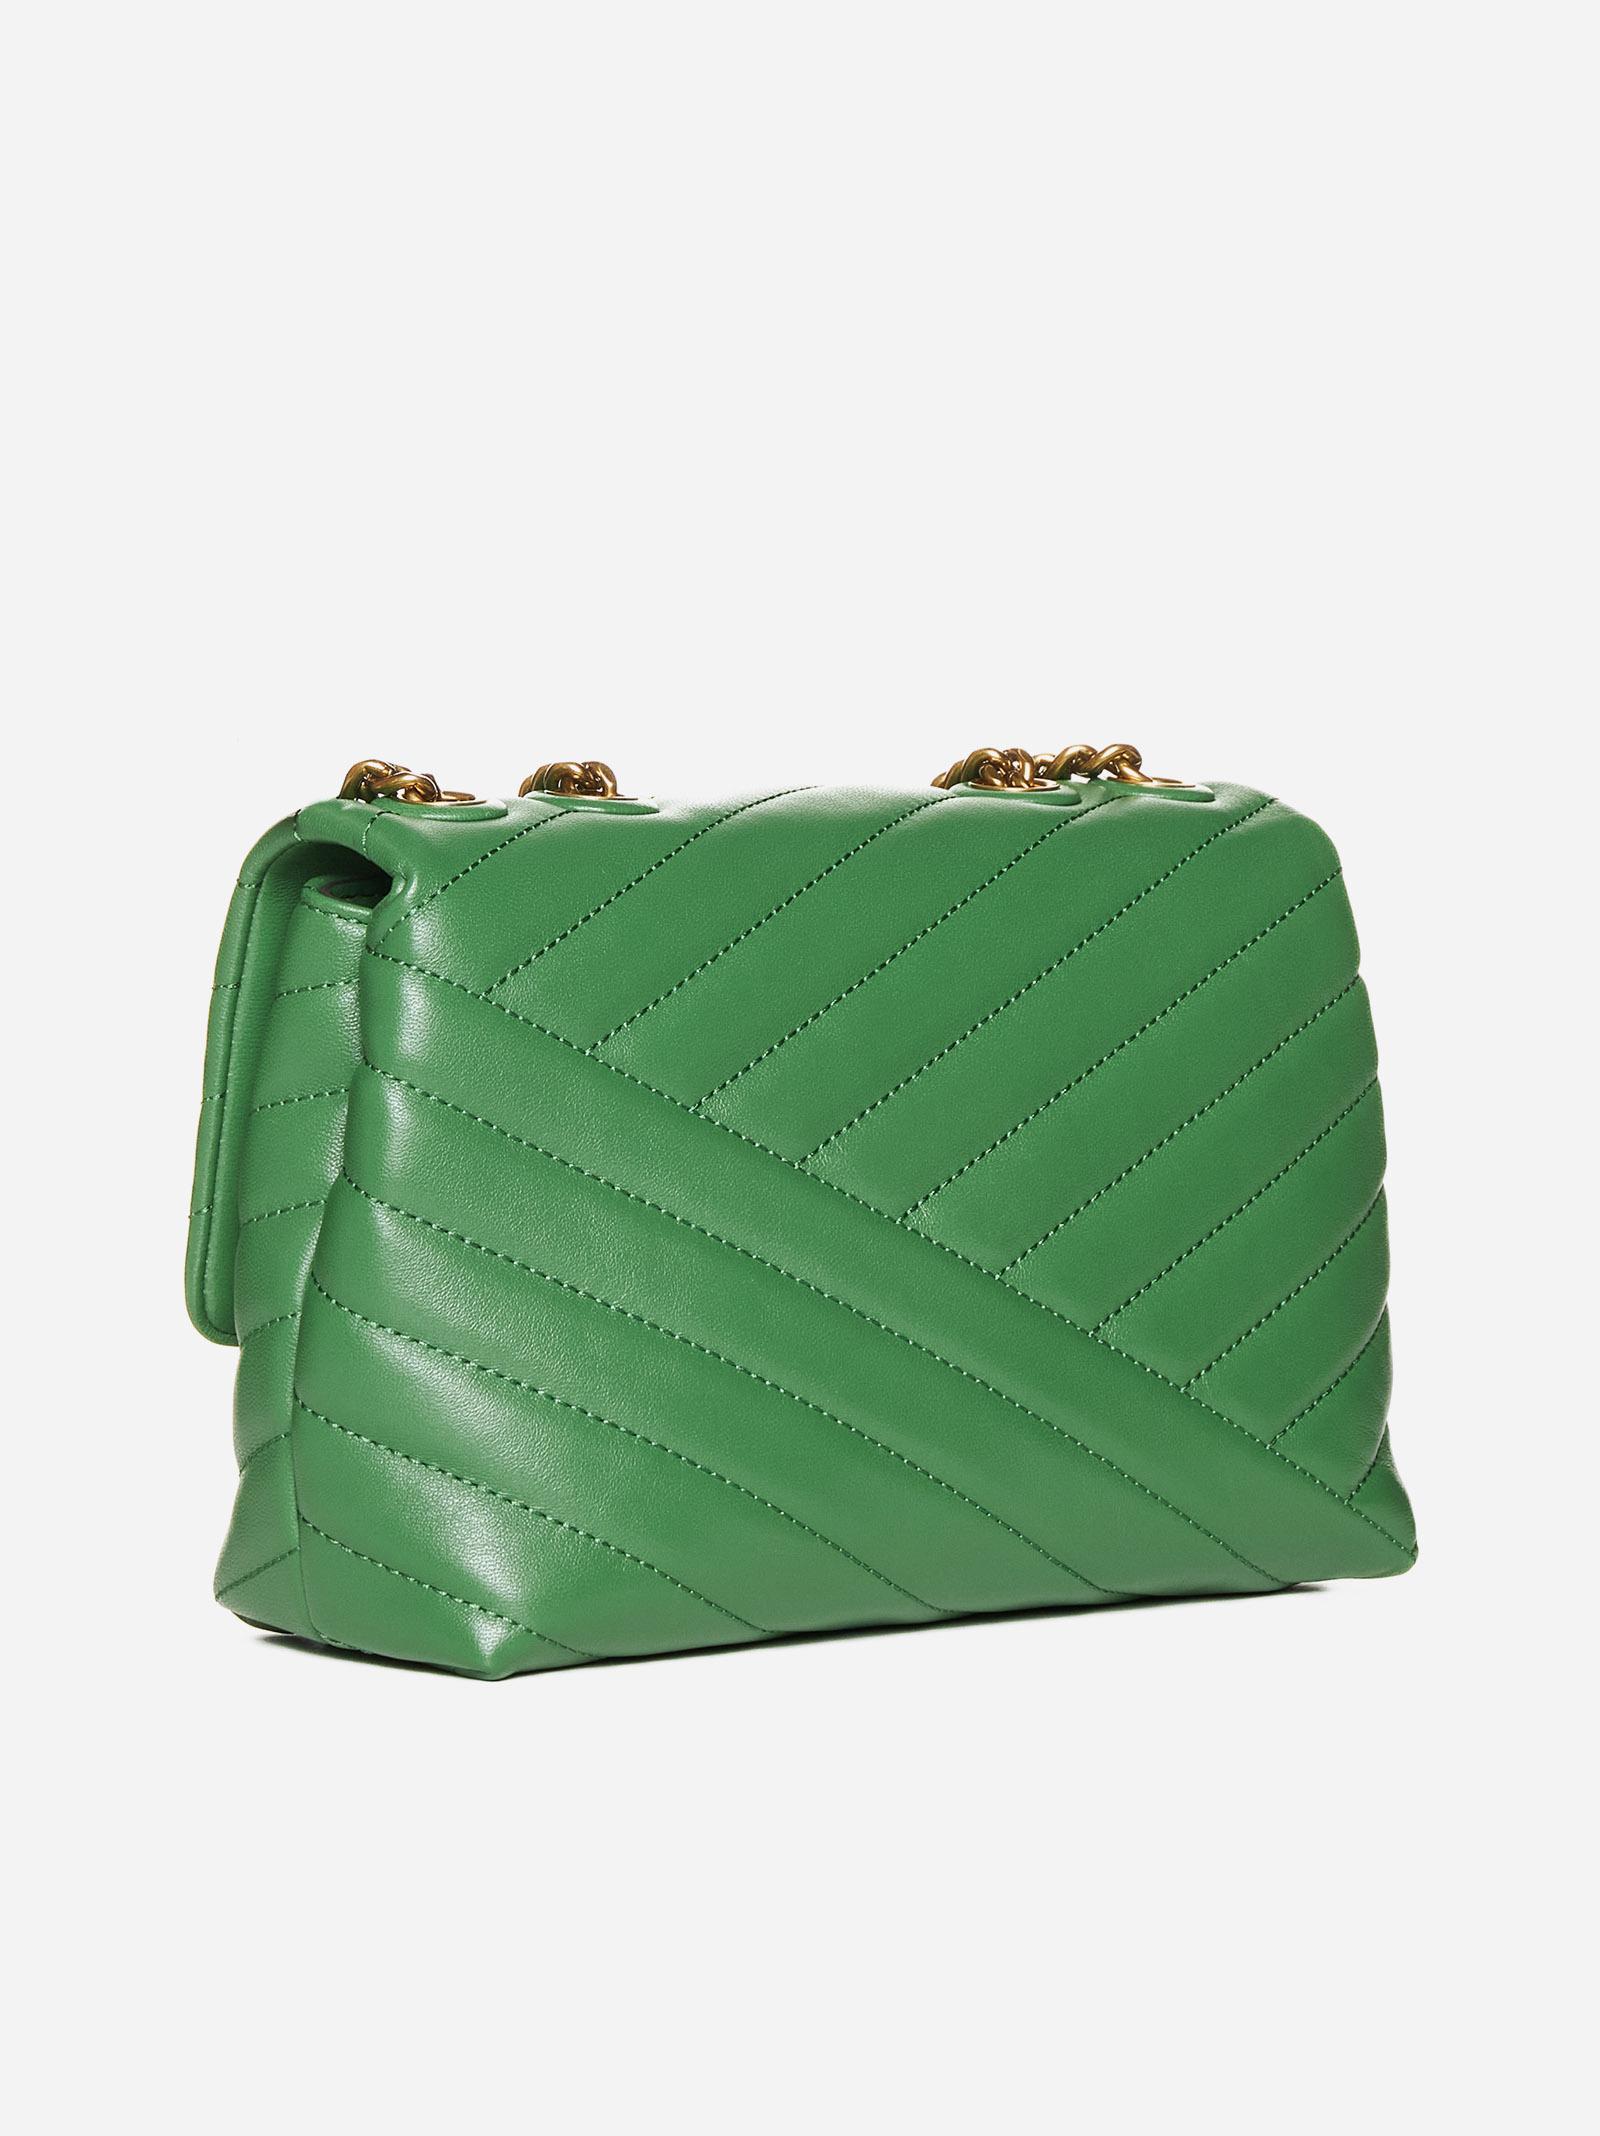 Tory Burch Kira Convertible Shoulder Bag in Green